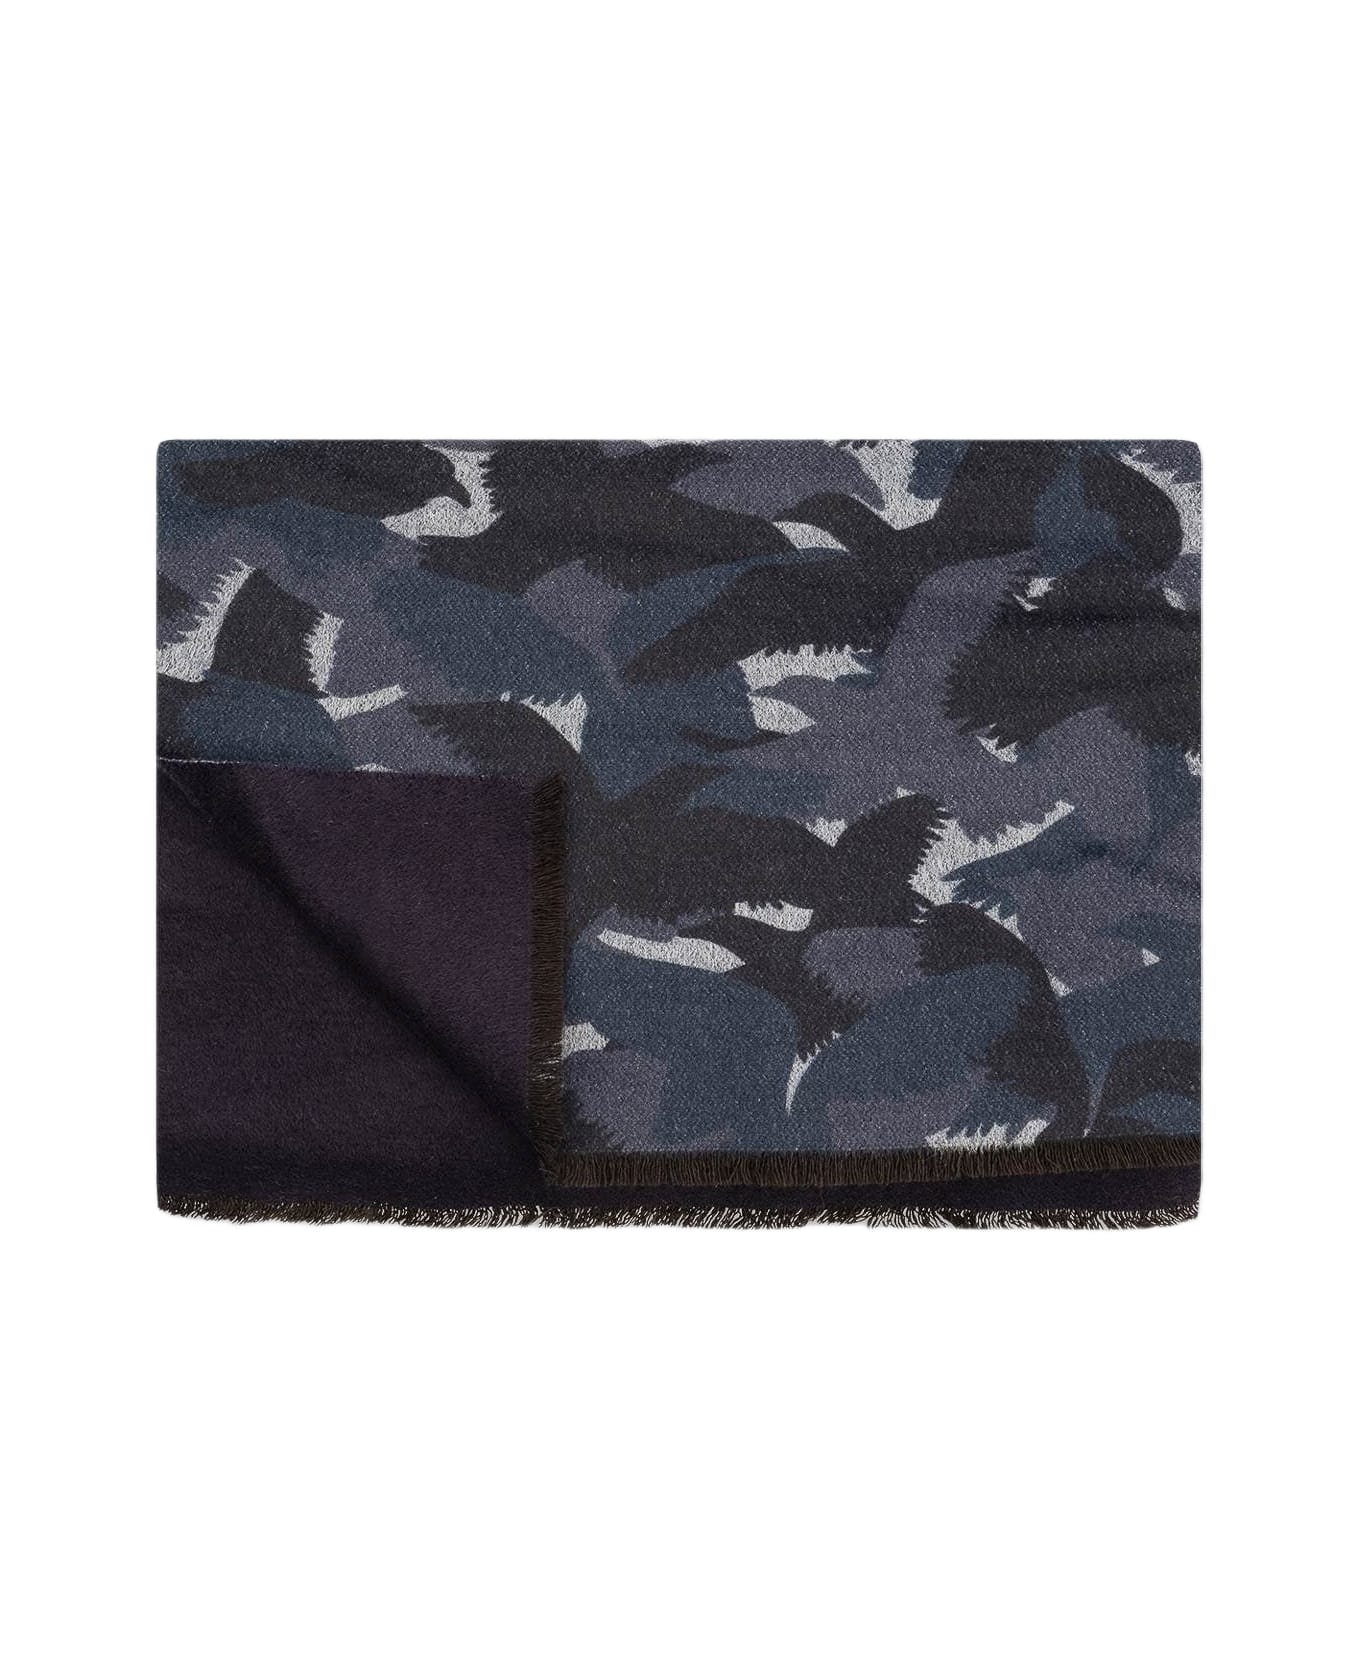 Larusmiani Camouflage Scarf Scarf - MidnightBlue スカーフ